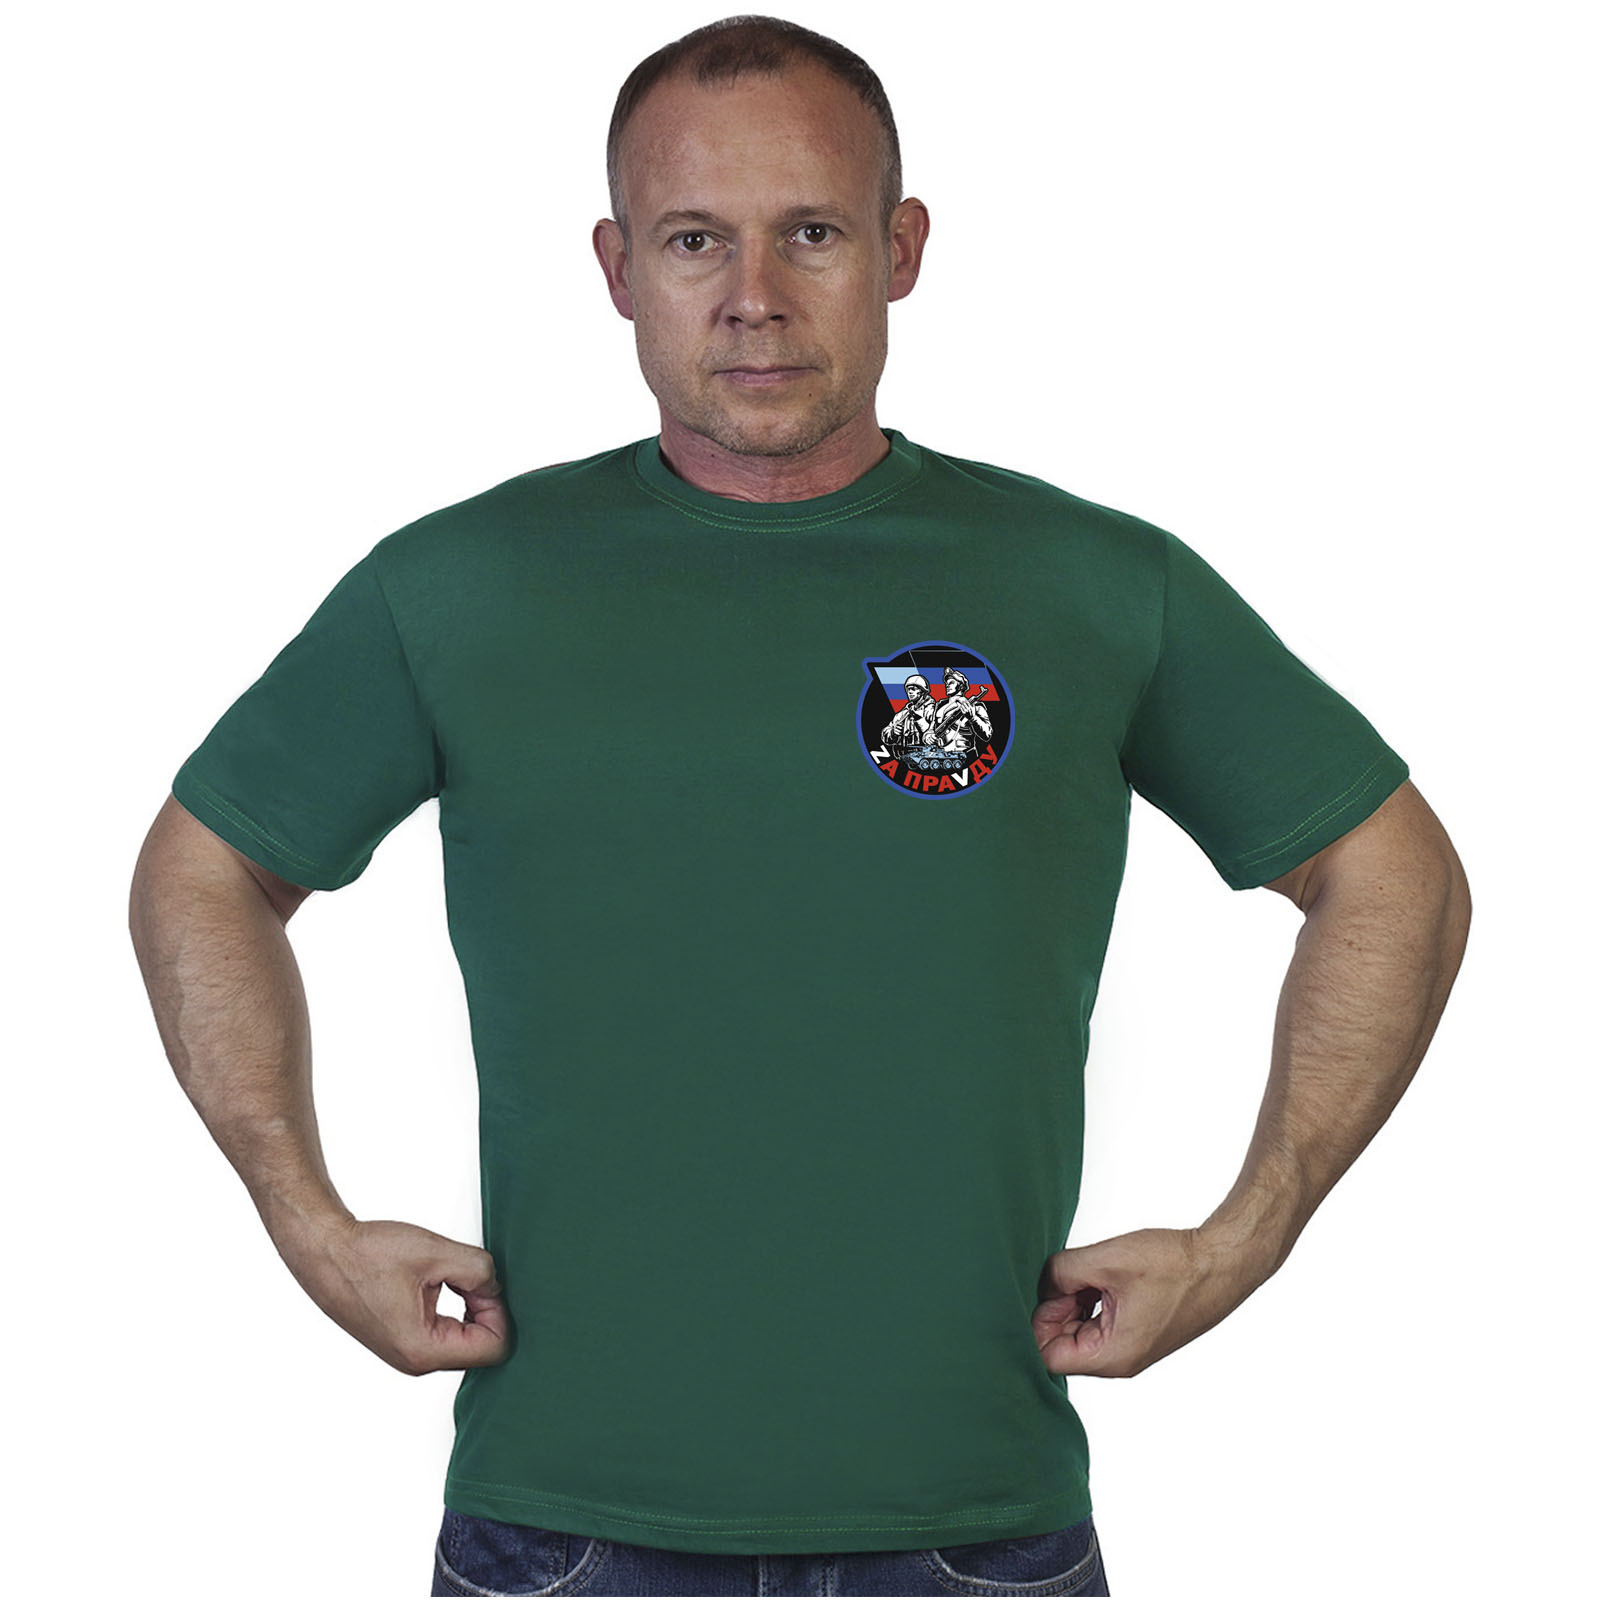 Зелёная футболка с термотрансфером "Zа праVду"